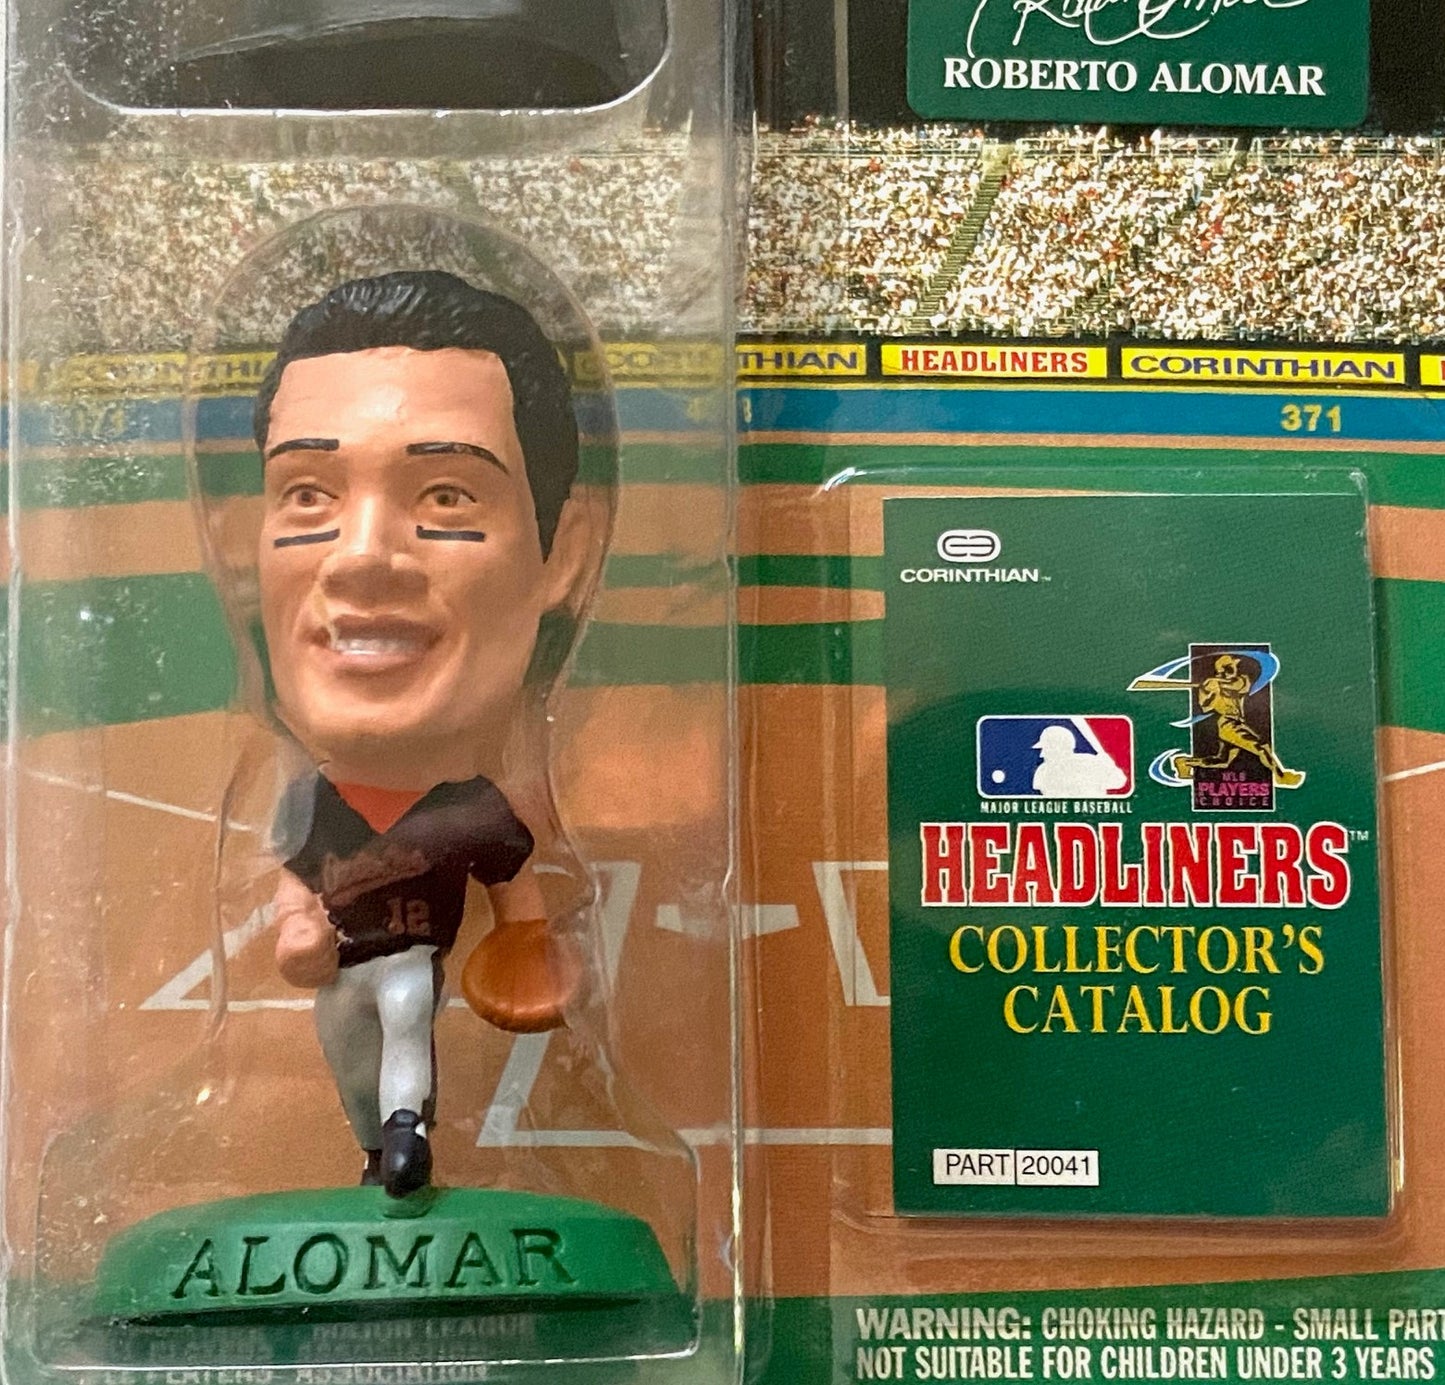 Roberto Alomar 1996 MLB Baltimore Orioles Headliner Figurine by Corinthian